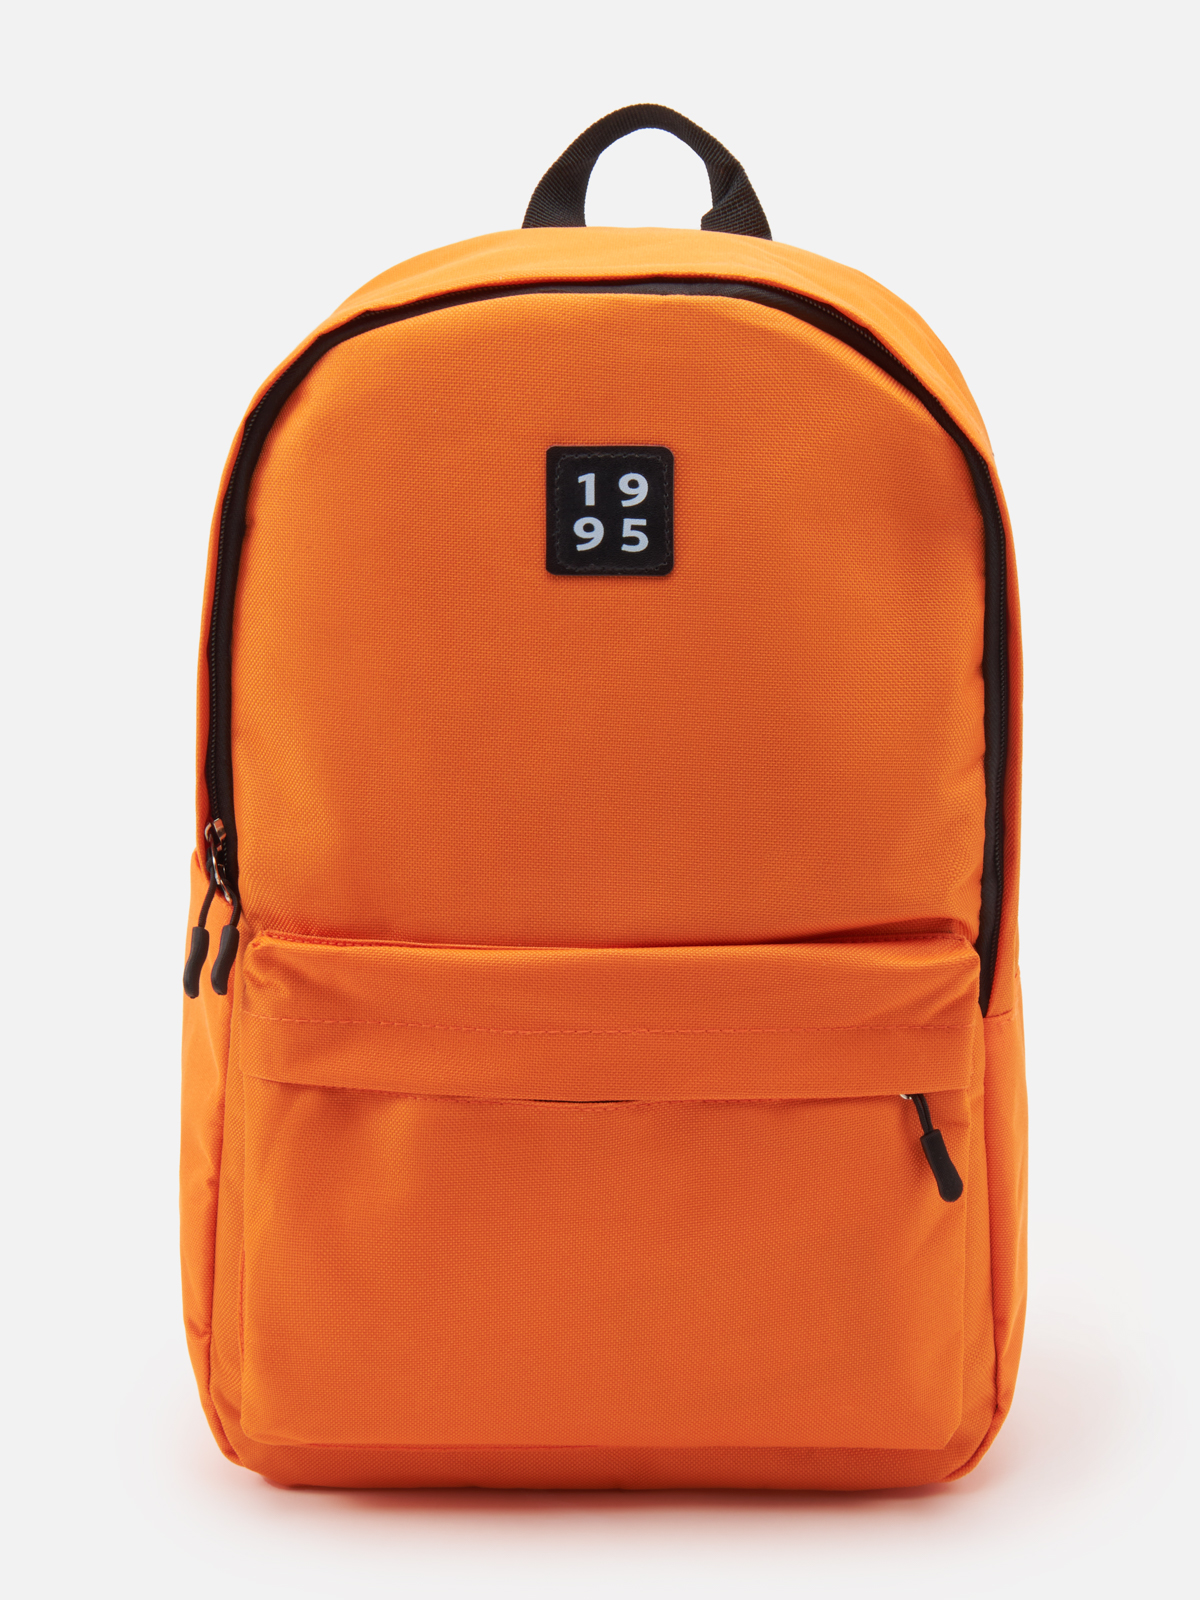 Рюкзак Hermann Vauck для женщин, оранжевый, 28x14x42 см, SUT